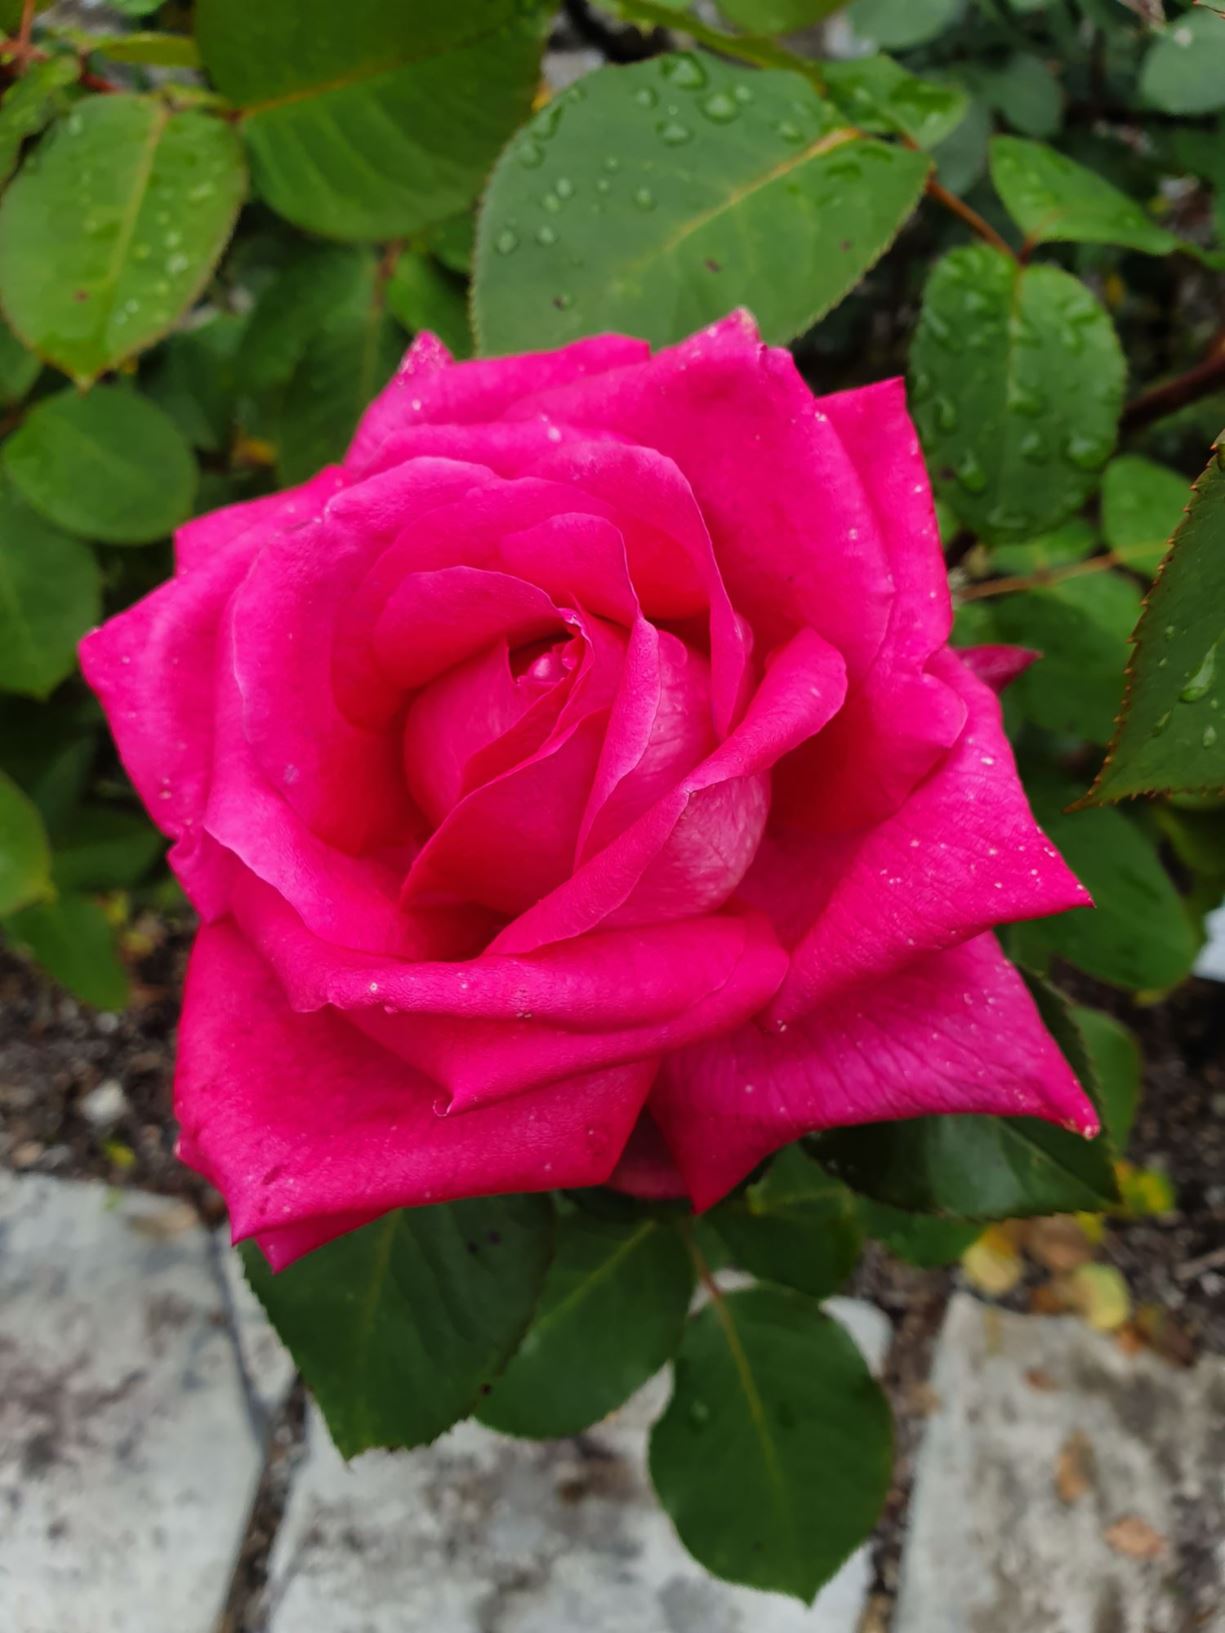 Rosa (Terosehybrider (HT) Group) 'Acapella' - 'Charlie's Rose', 'TANallepa'